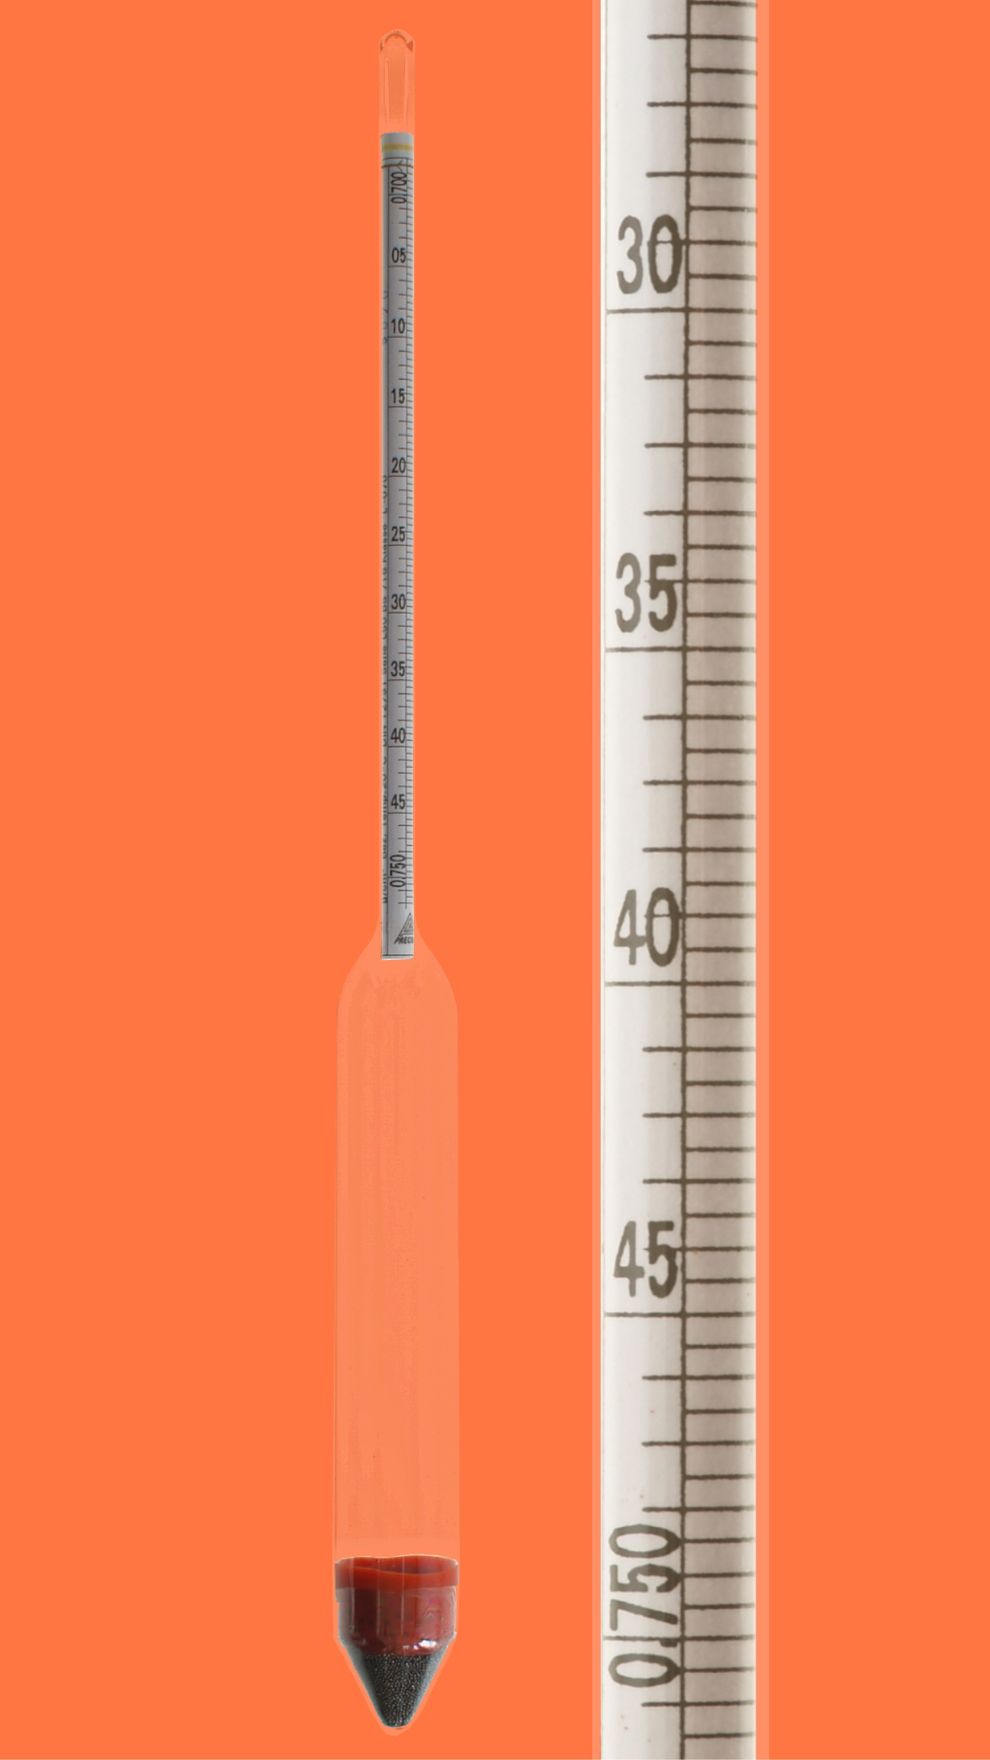 Aräometer, DIN 12791, L50, 1,10-1,15:0,0005g/cm³, Bezugstemp. 20°C, ohne Thermometer